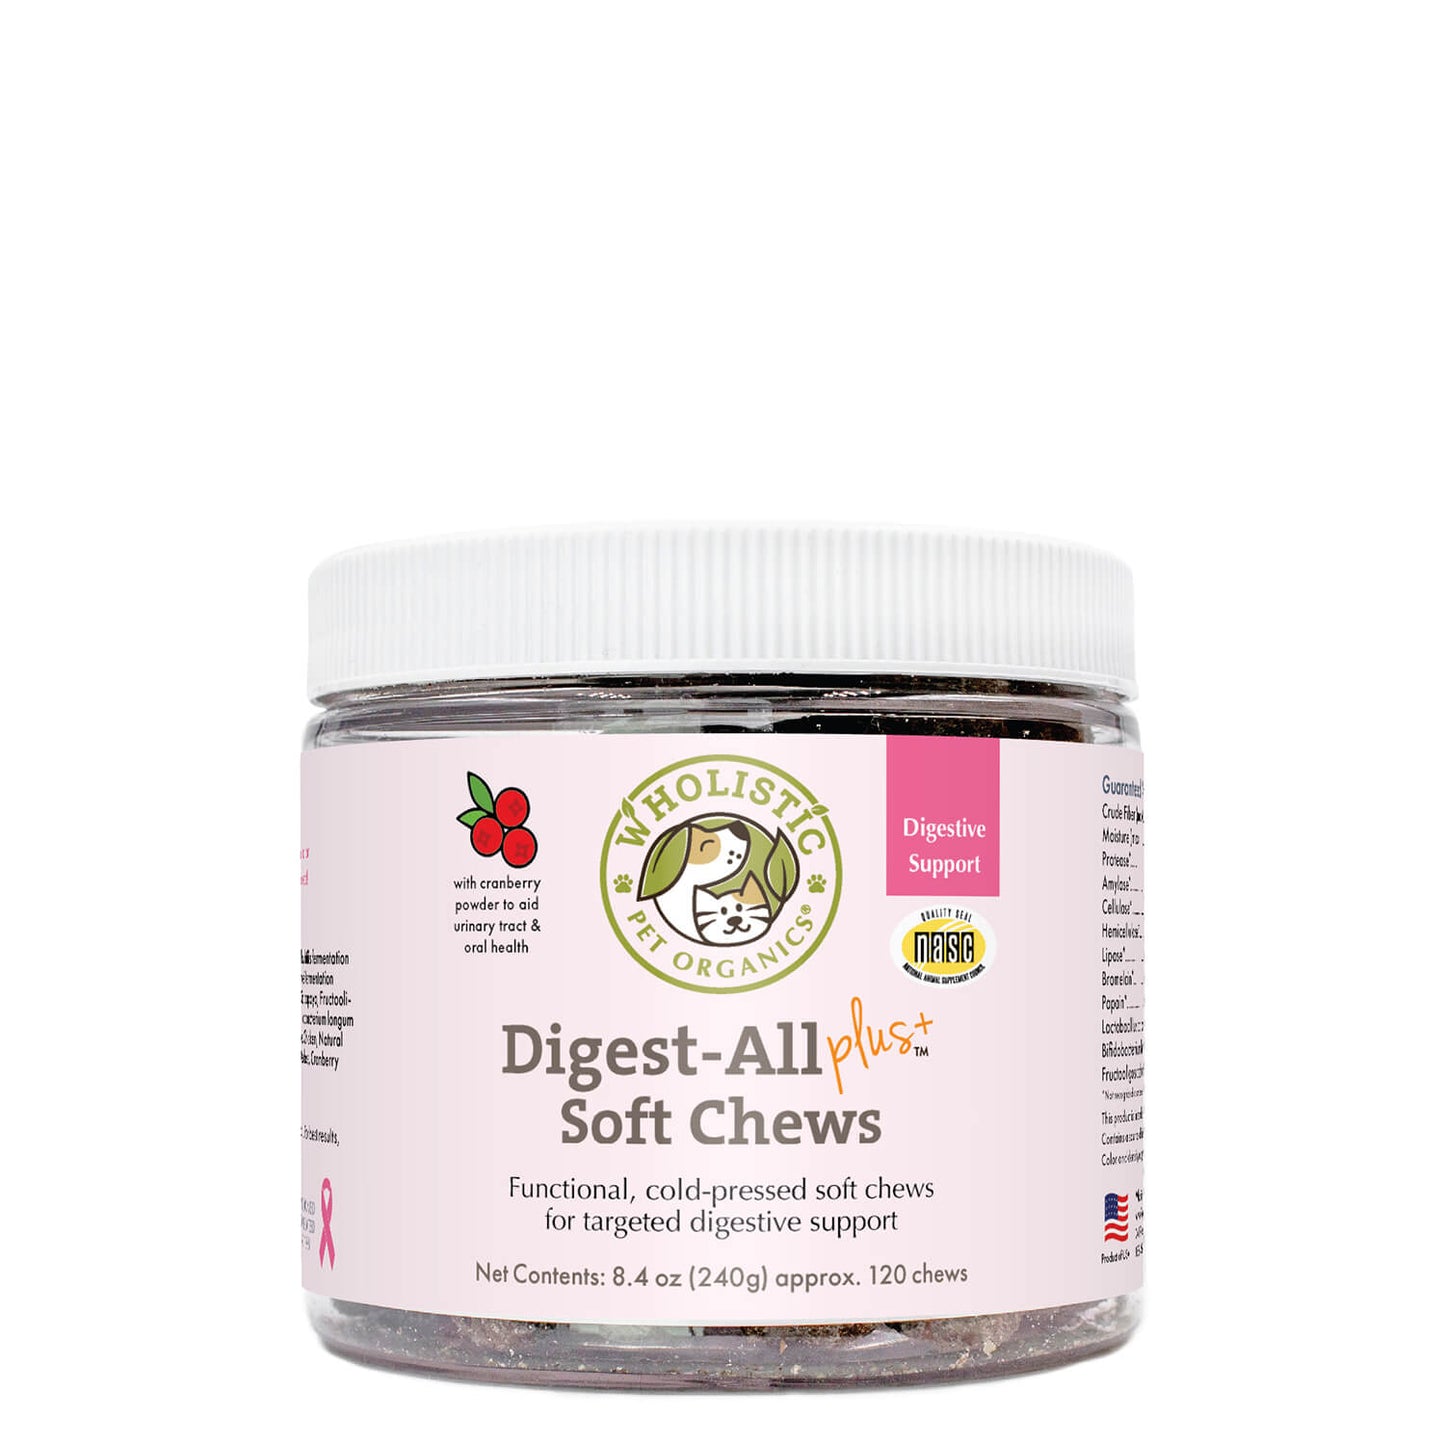 Digest-All Plus Cranberry Soft Chews